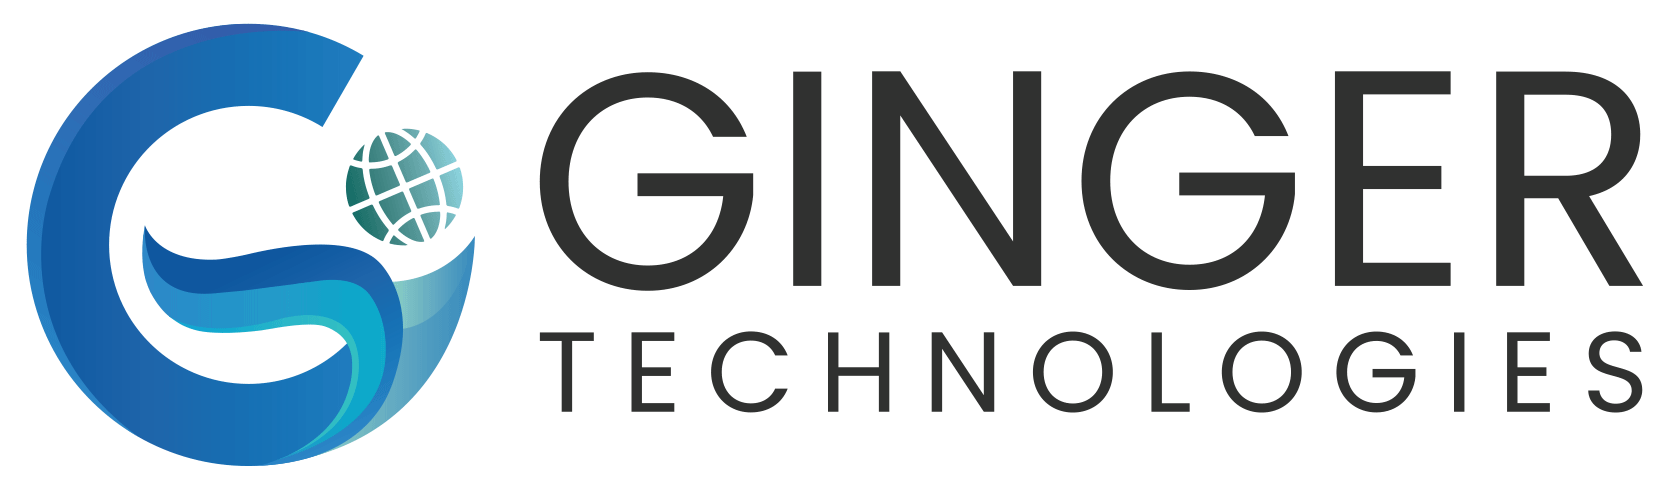 Ginger Technologies - Best Web Design Company in Qatar